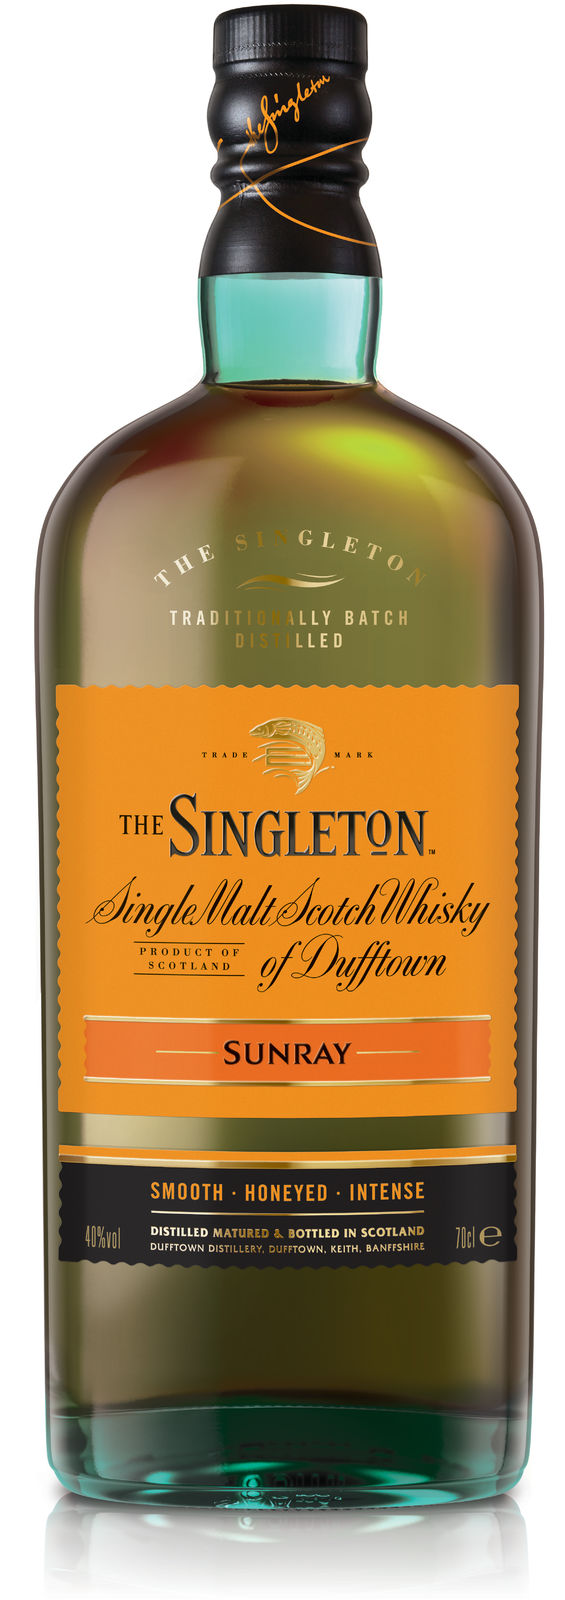 Wir verkosten: The Singleton of Dufftown Sunray